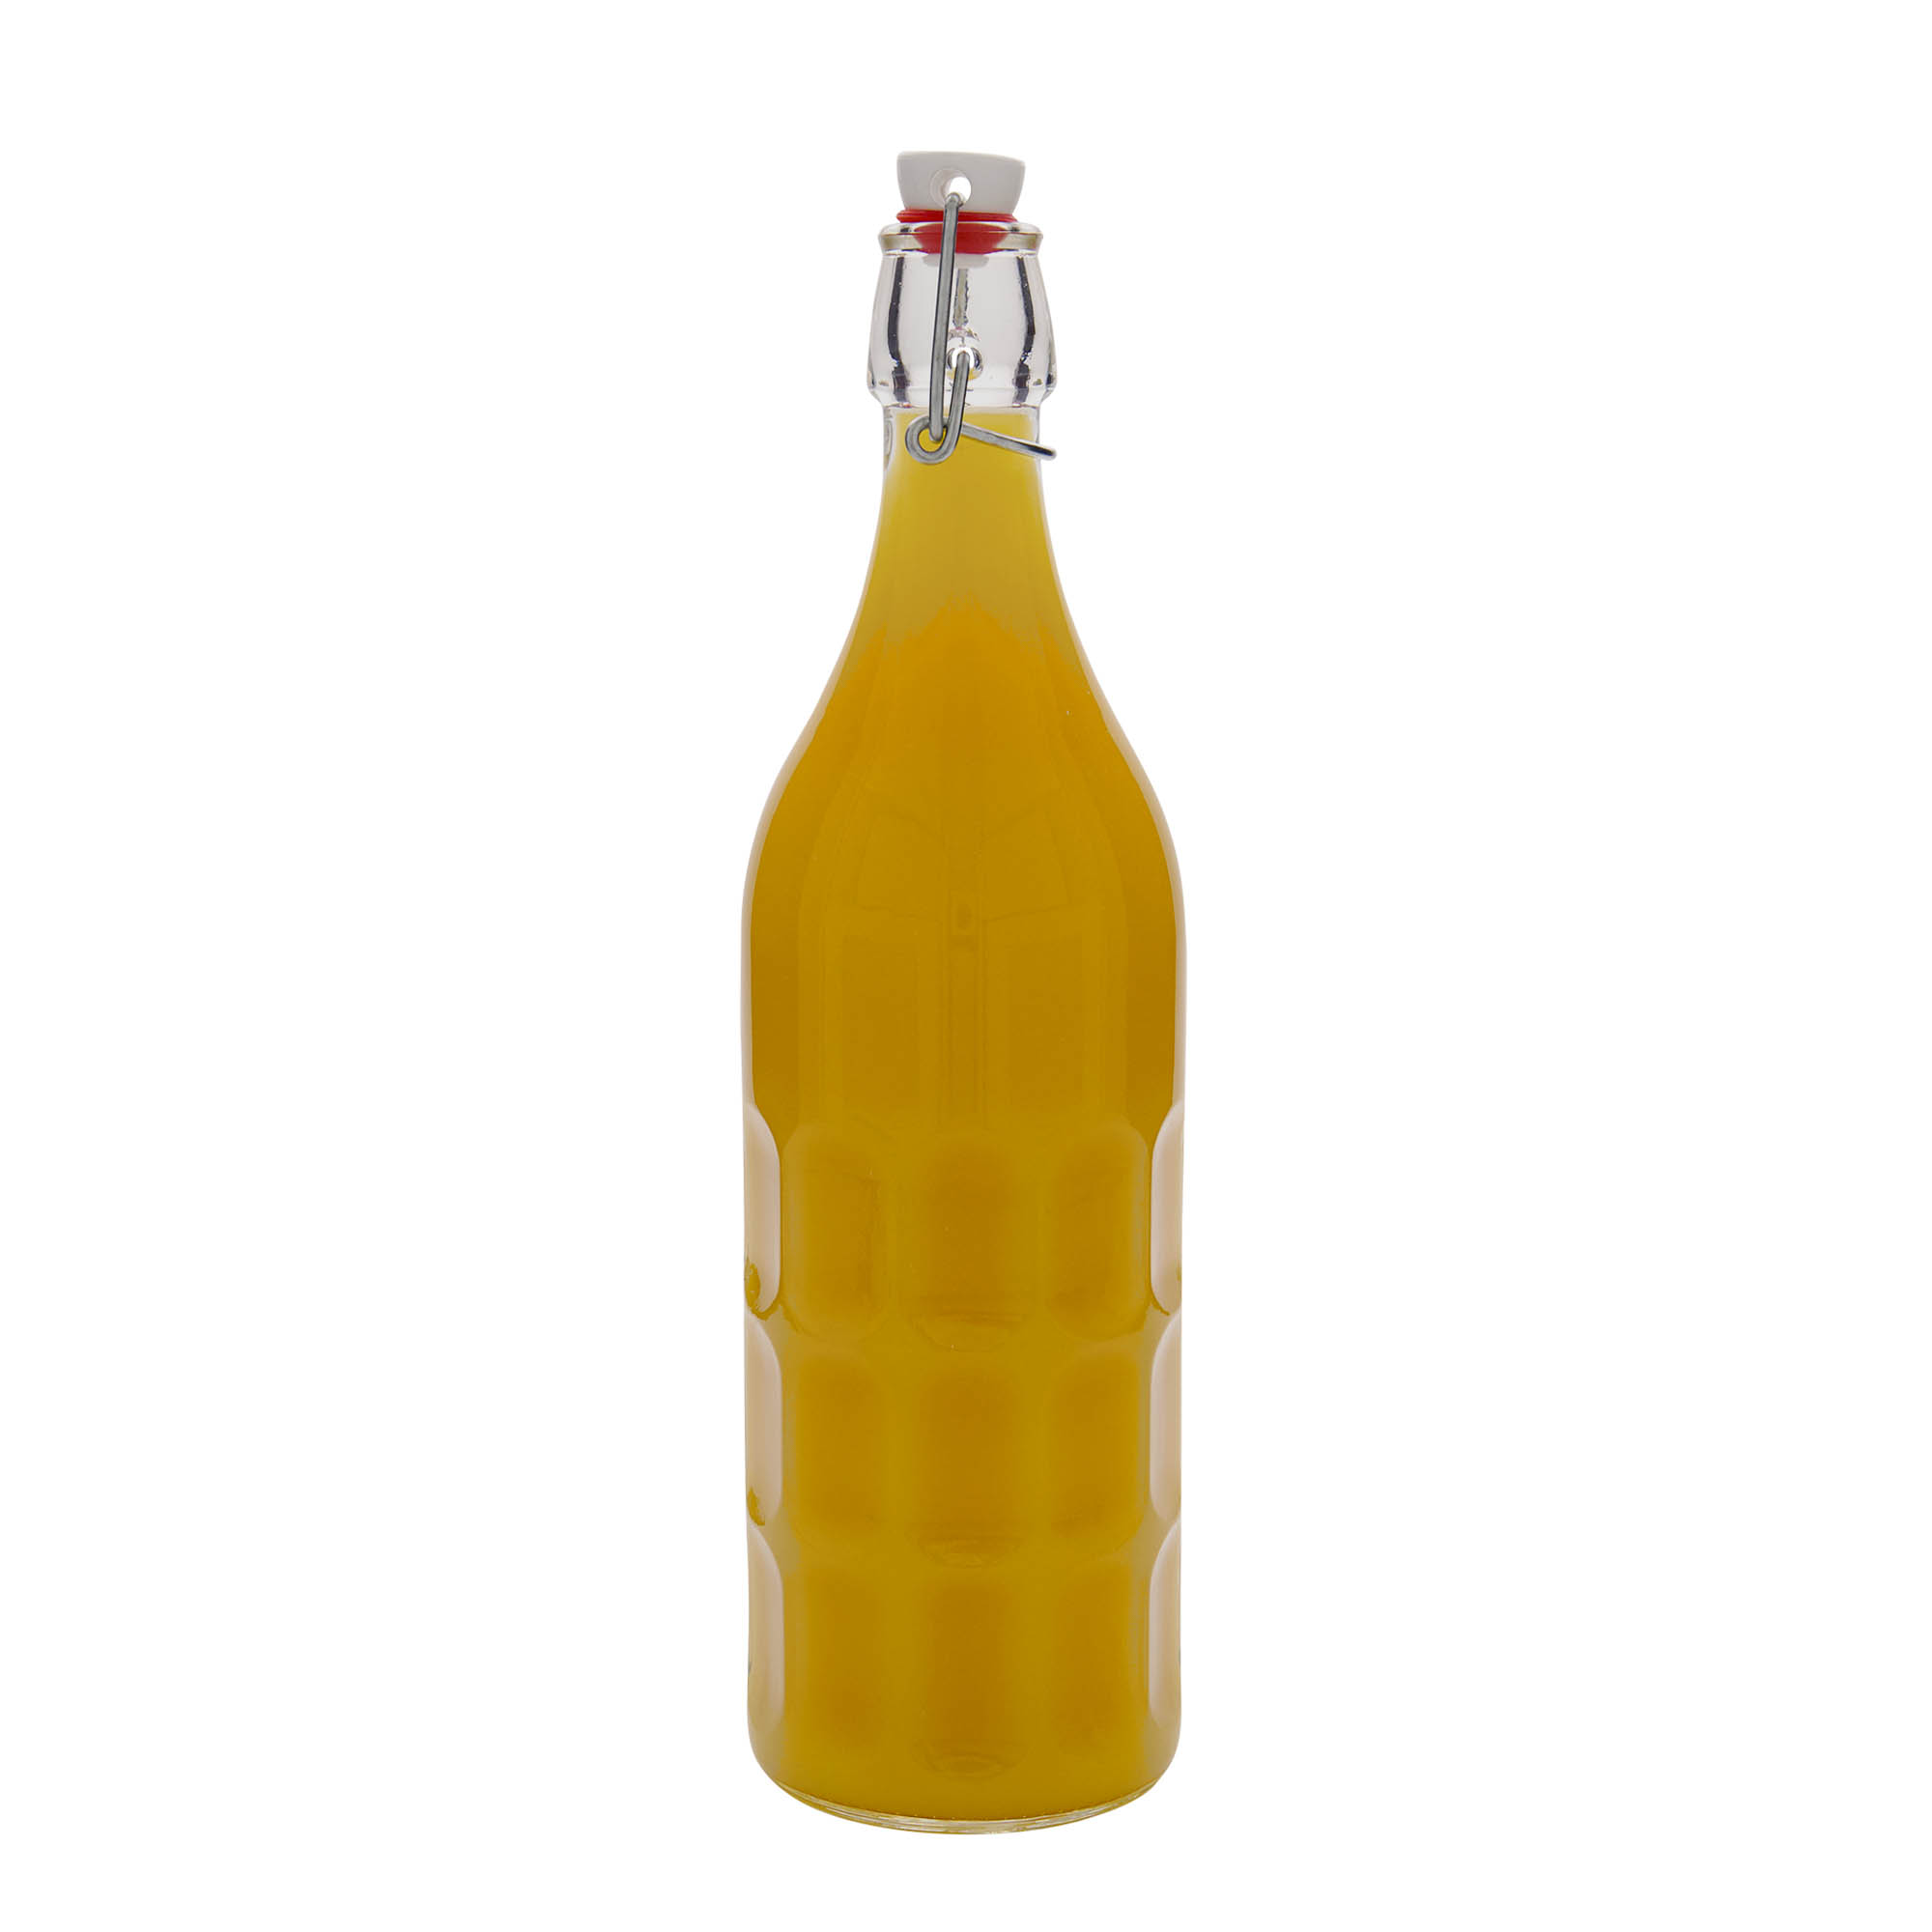 1,000 ml glass bottle ‘Moresca’, closure: swing top